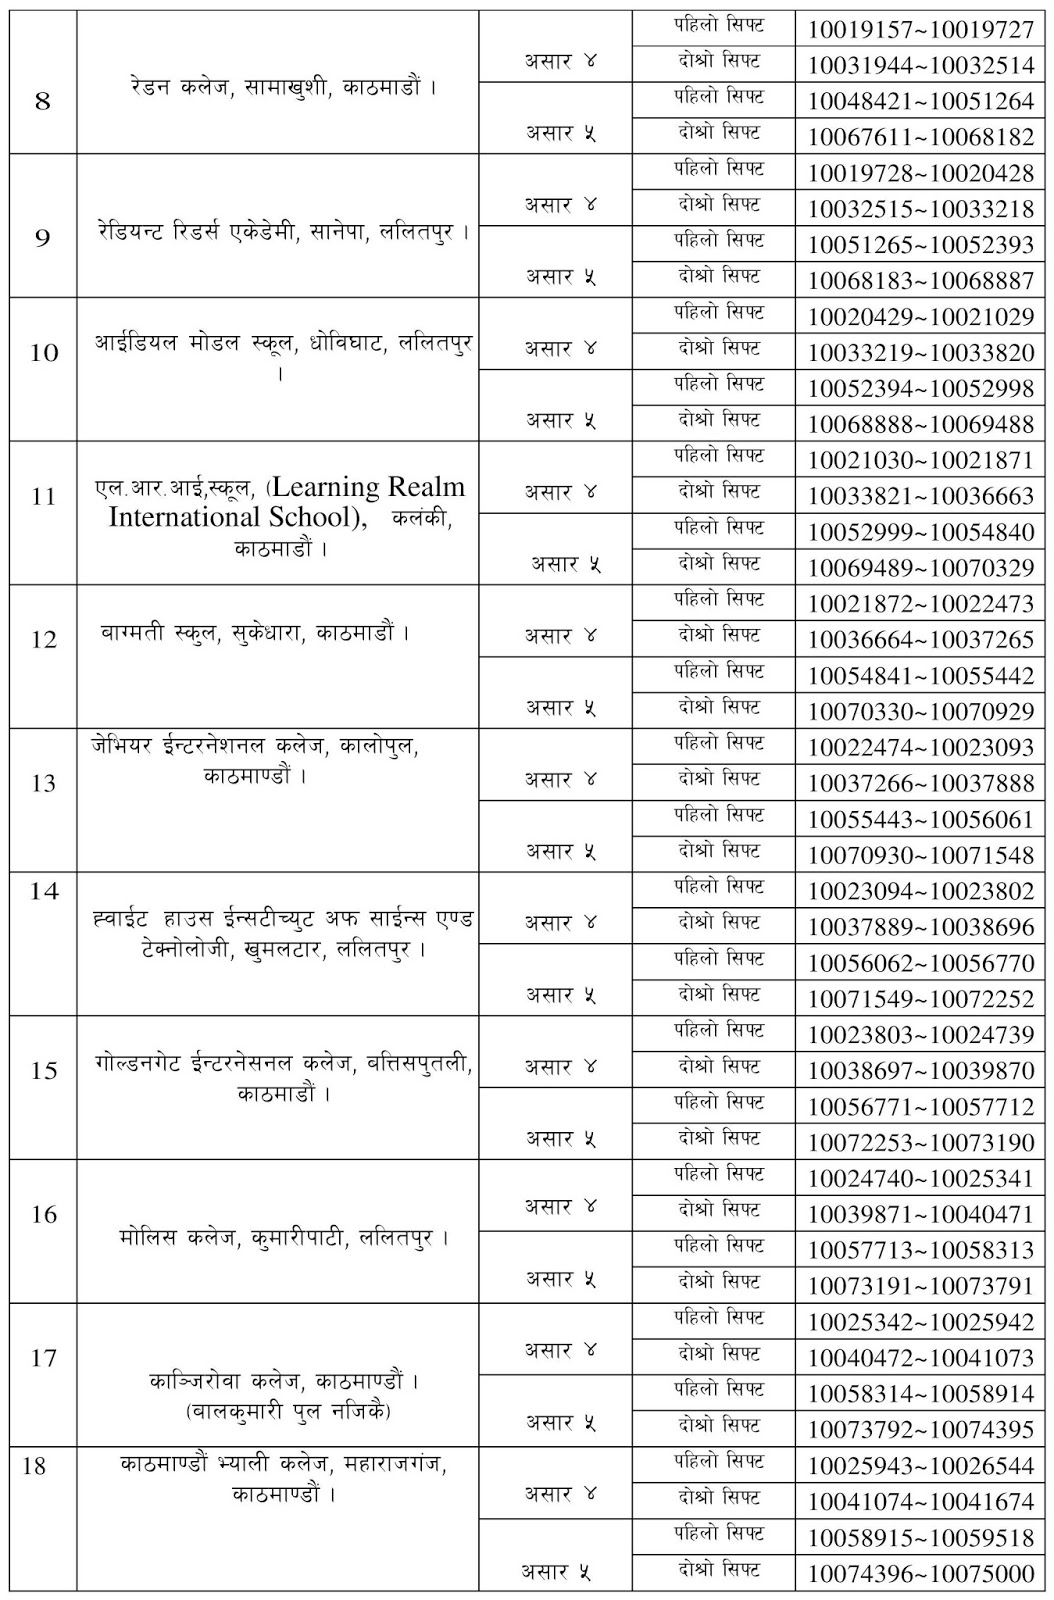 7th eps topik exam center nepal 2073